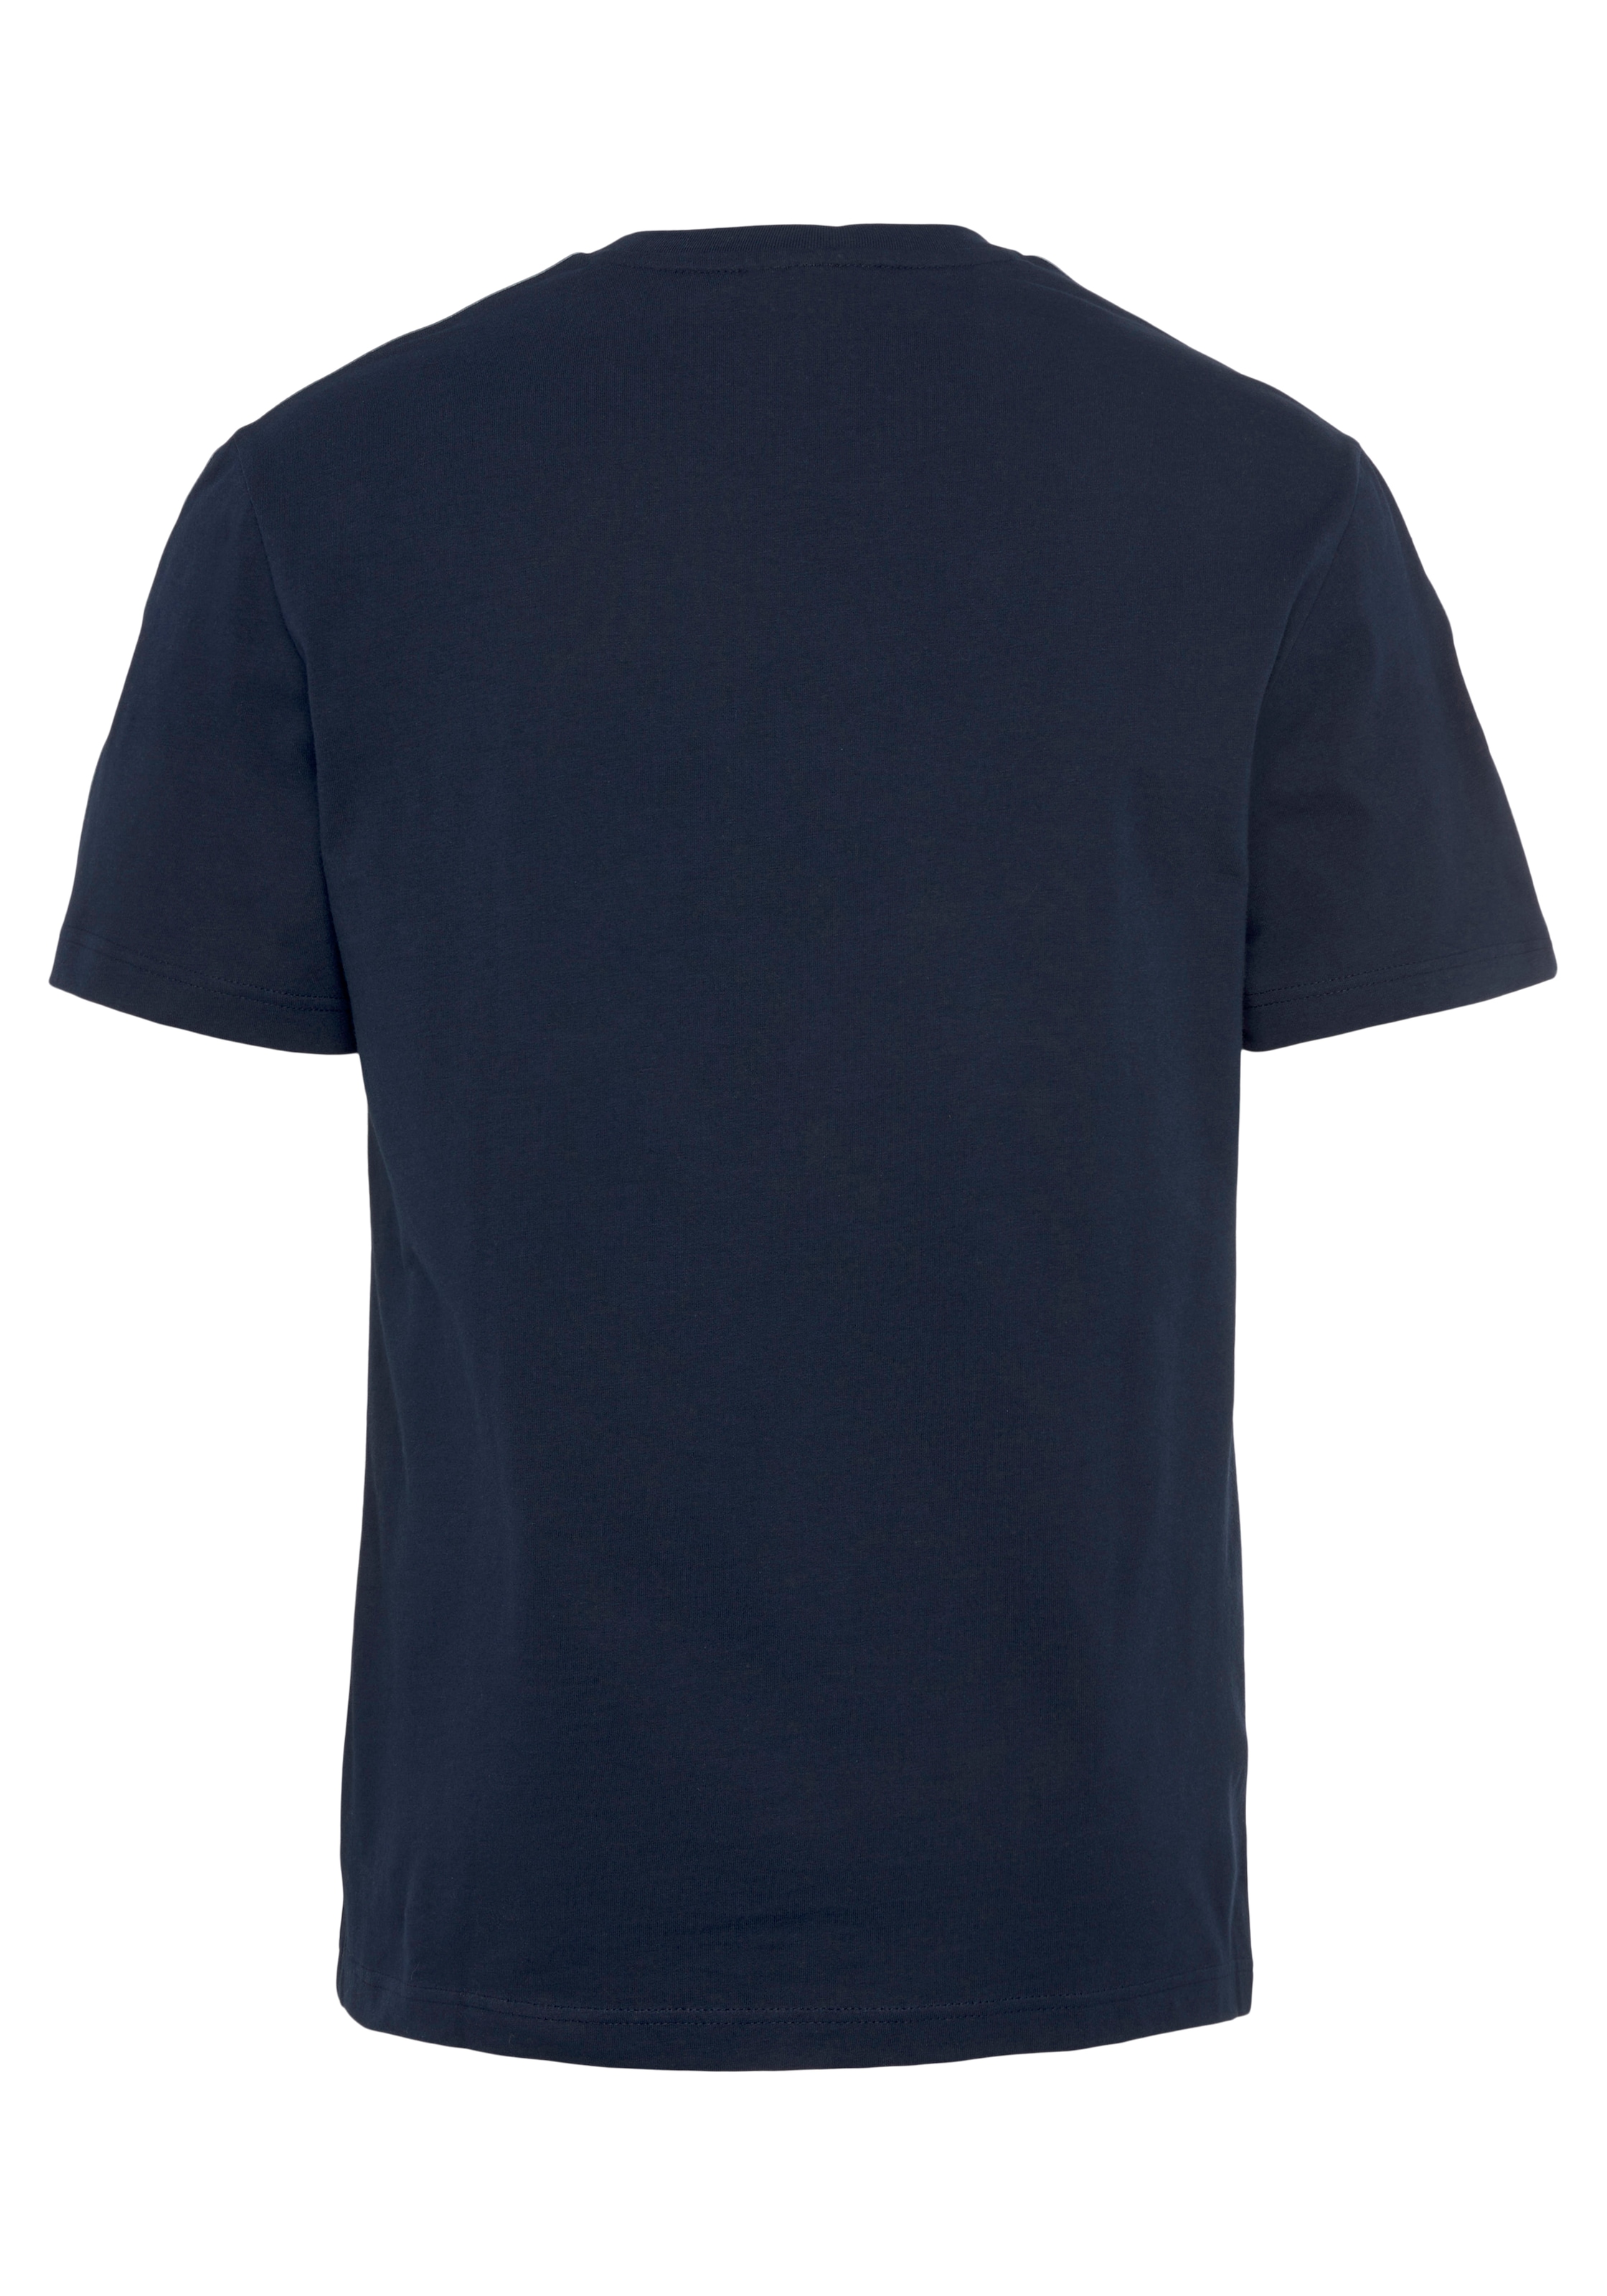 beschriftetem an bei T-Shirt, den bestellen online Kontrastband Schultern Lacoste OTTO mit